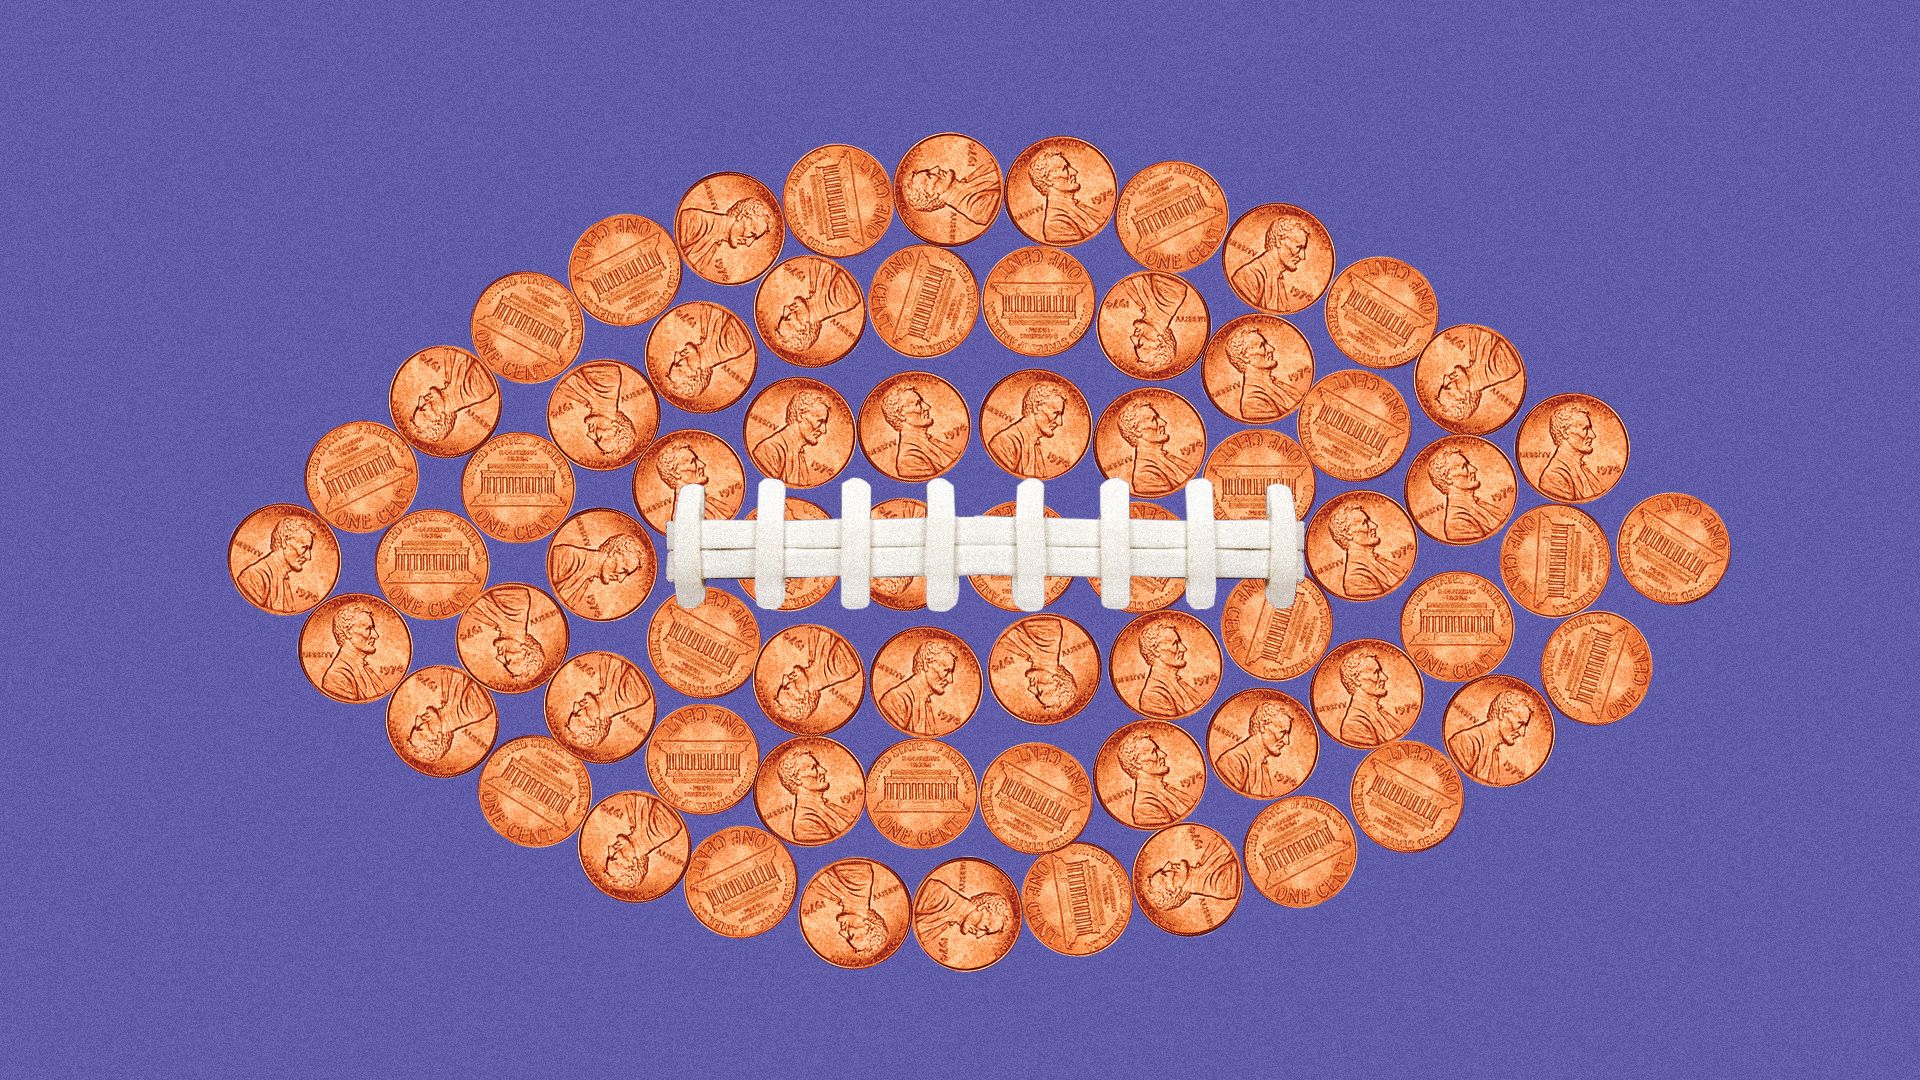 Football made of pennies